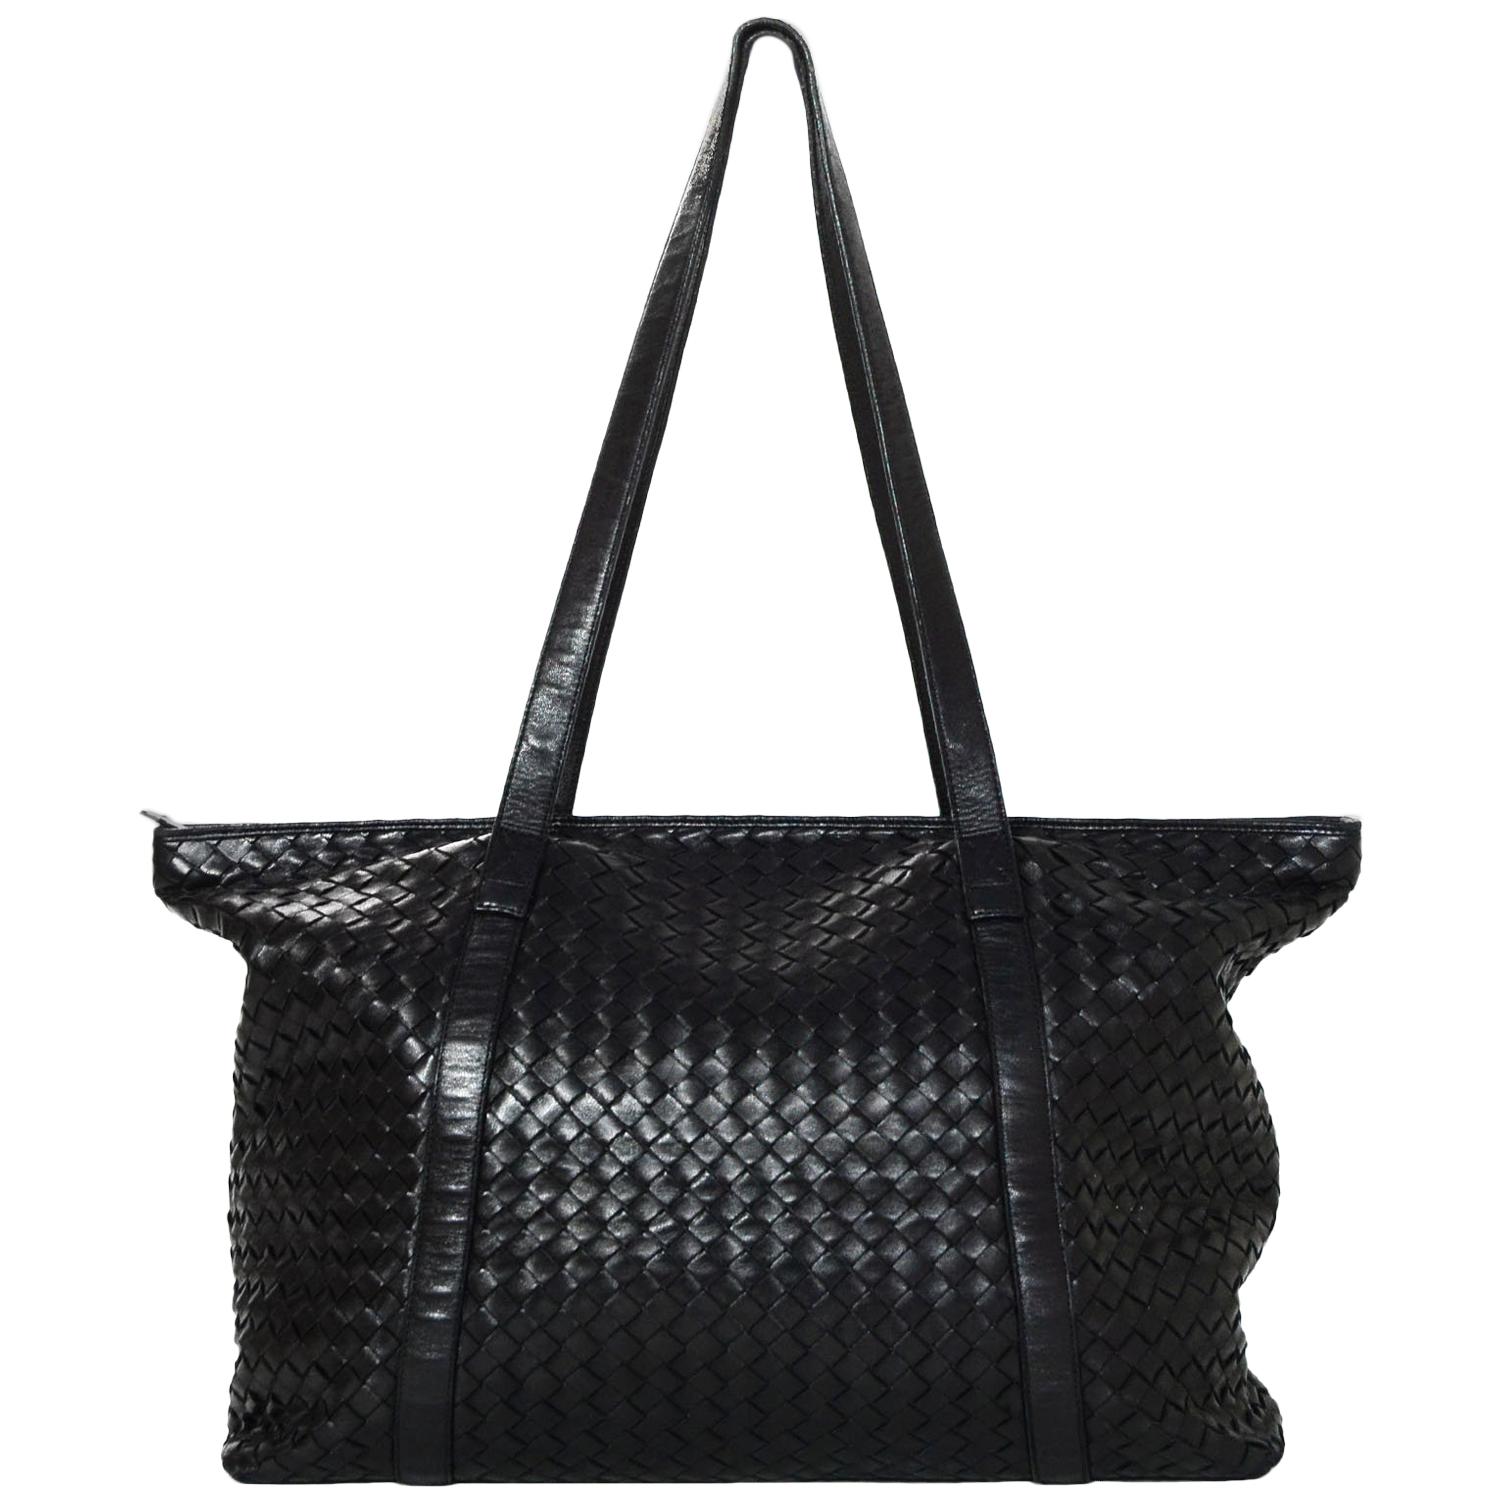  Bottega Veneta Black Woven Leather Intrecciato Tote Bag